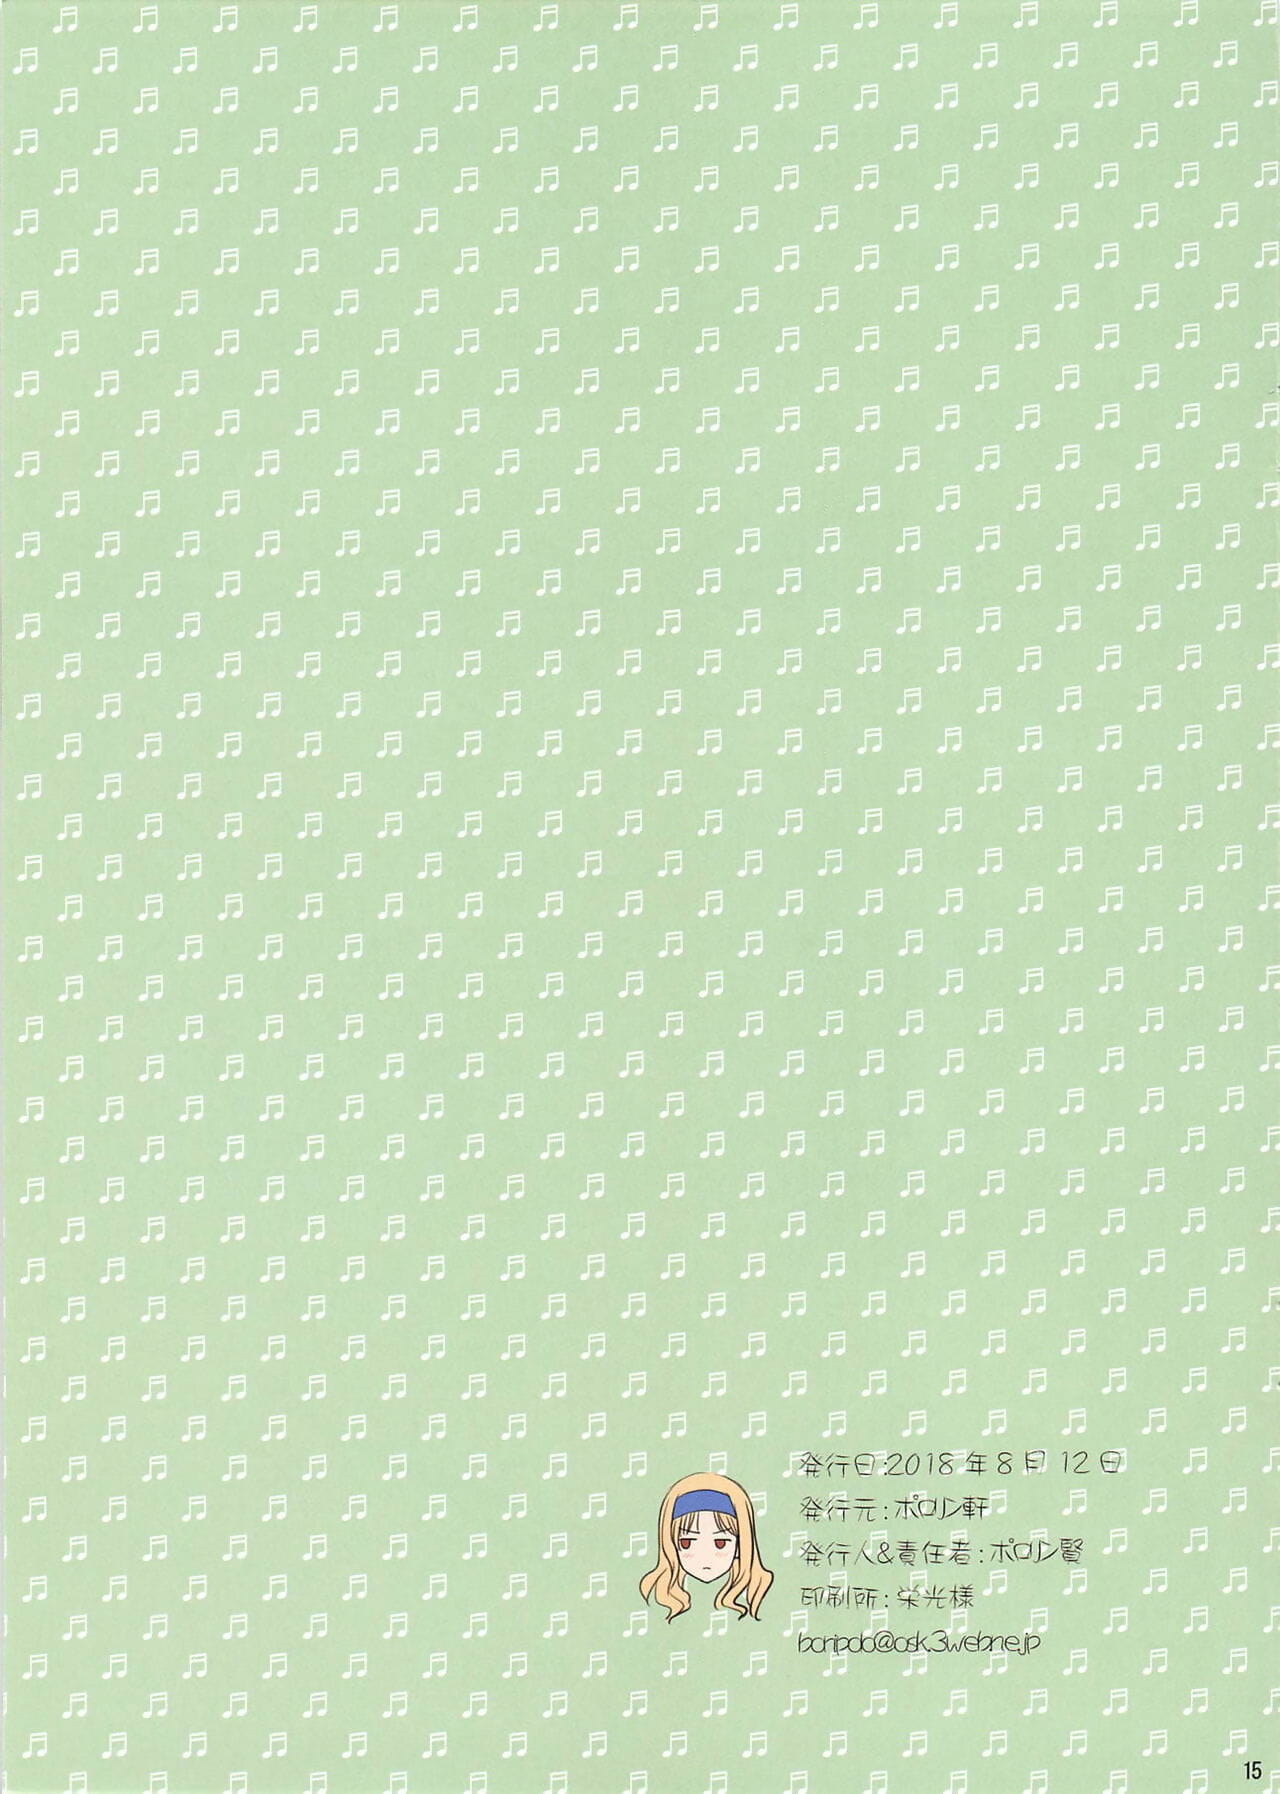 menu:48 大安菜斋 和脊 chan! page 1